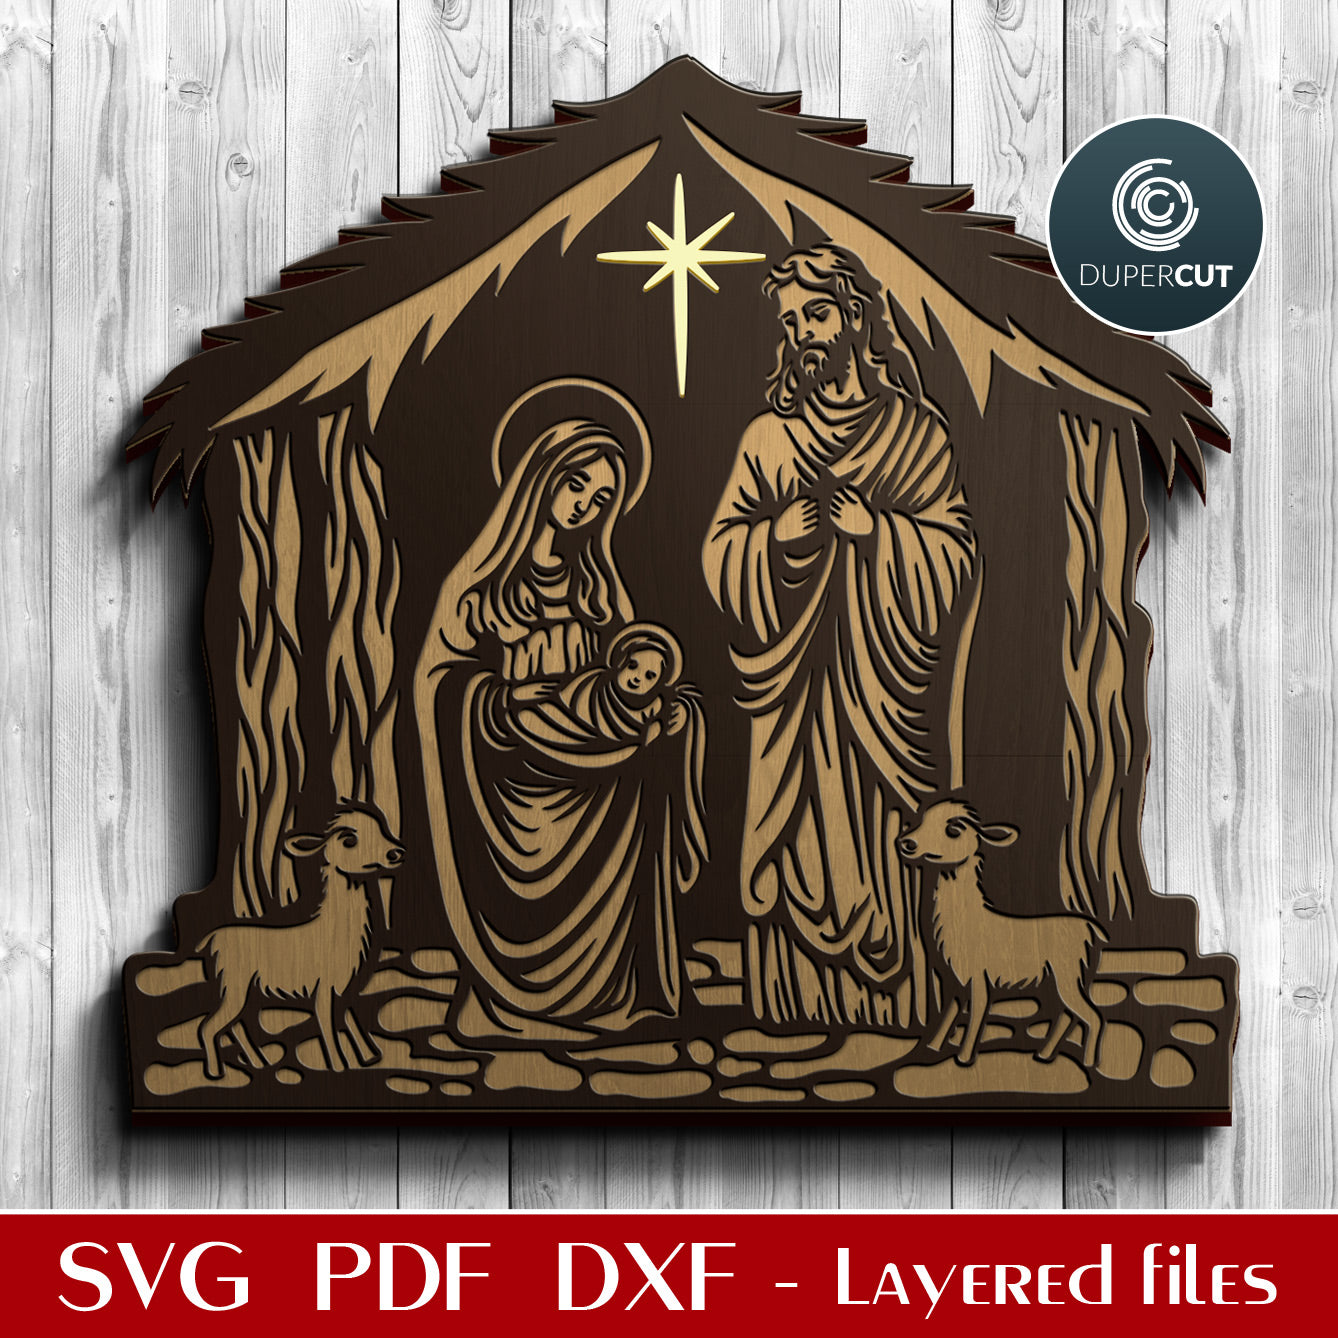 Christmas Nativity scene birth of Jesus Christ - SVG DXF vector layered files for laser cutting Glowforge, Cricut, CNC plasma machines by www.dupercut.com